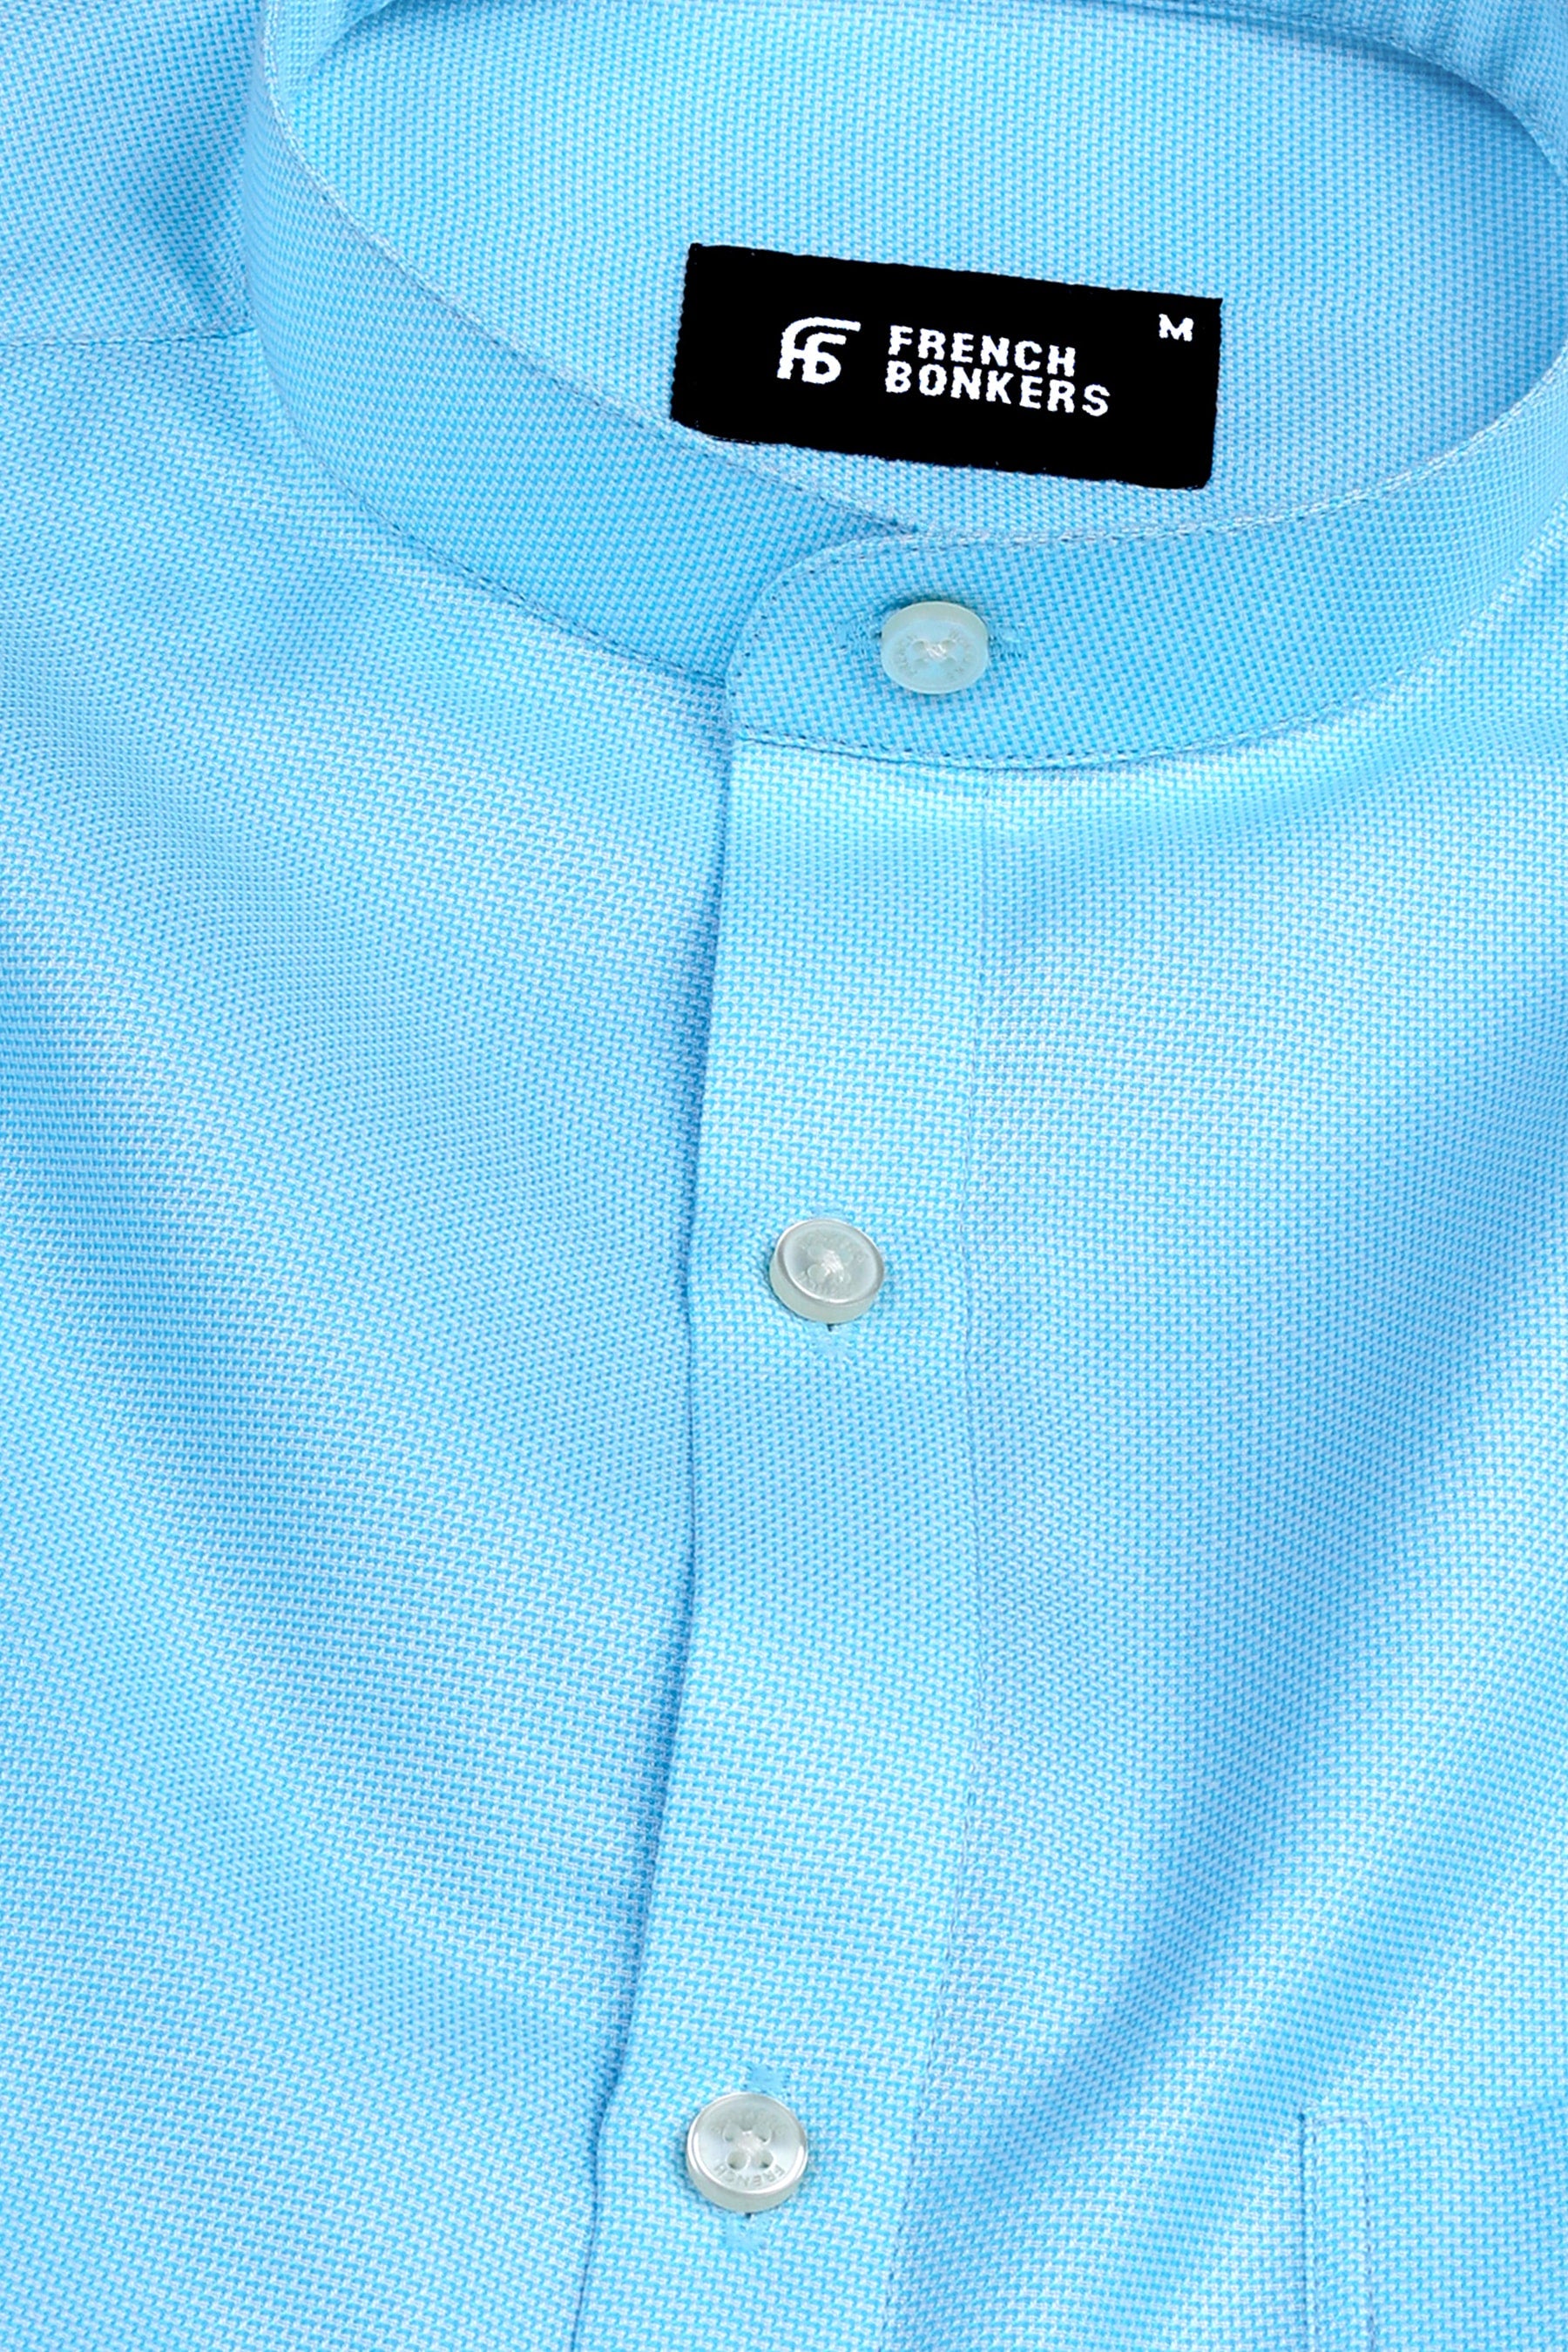 Turquoise sky blue dobby texture shirt